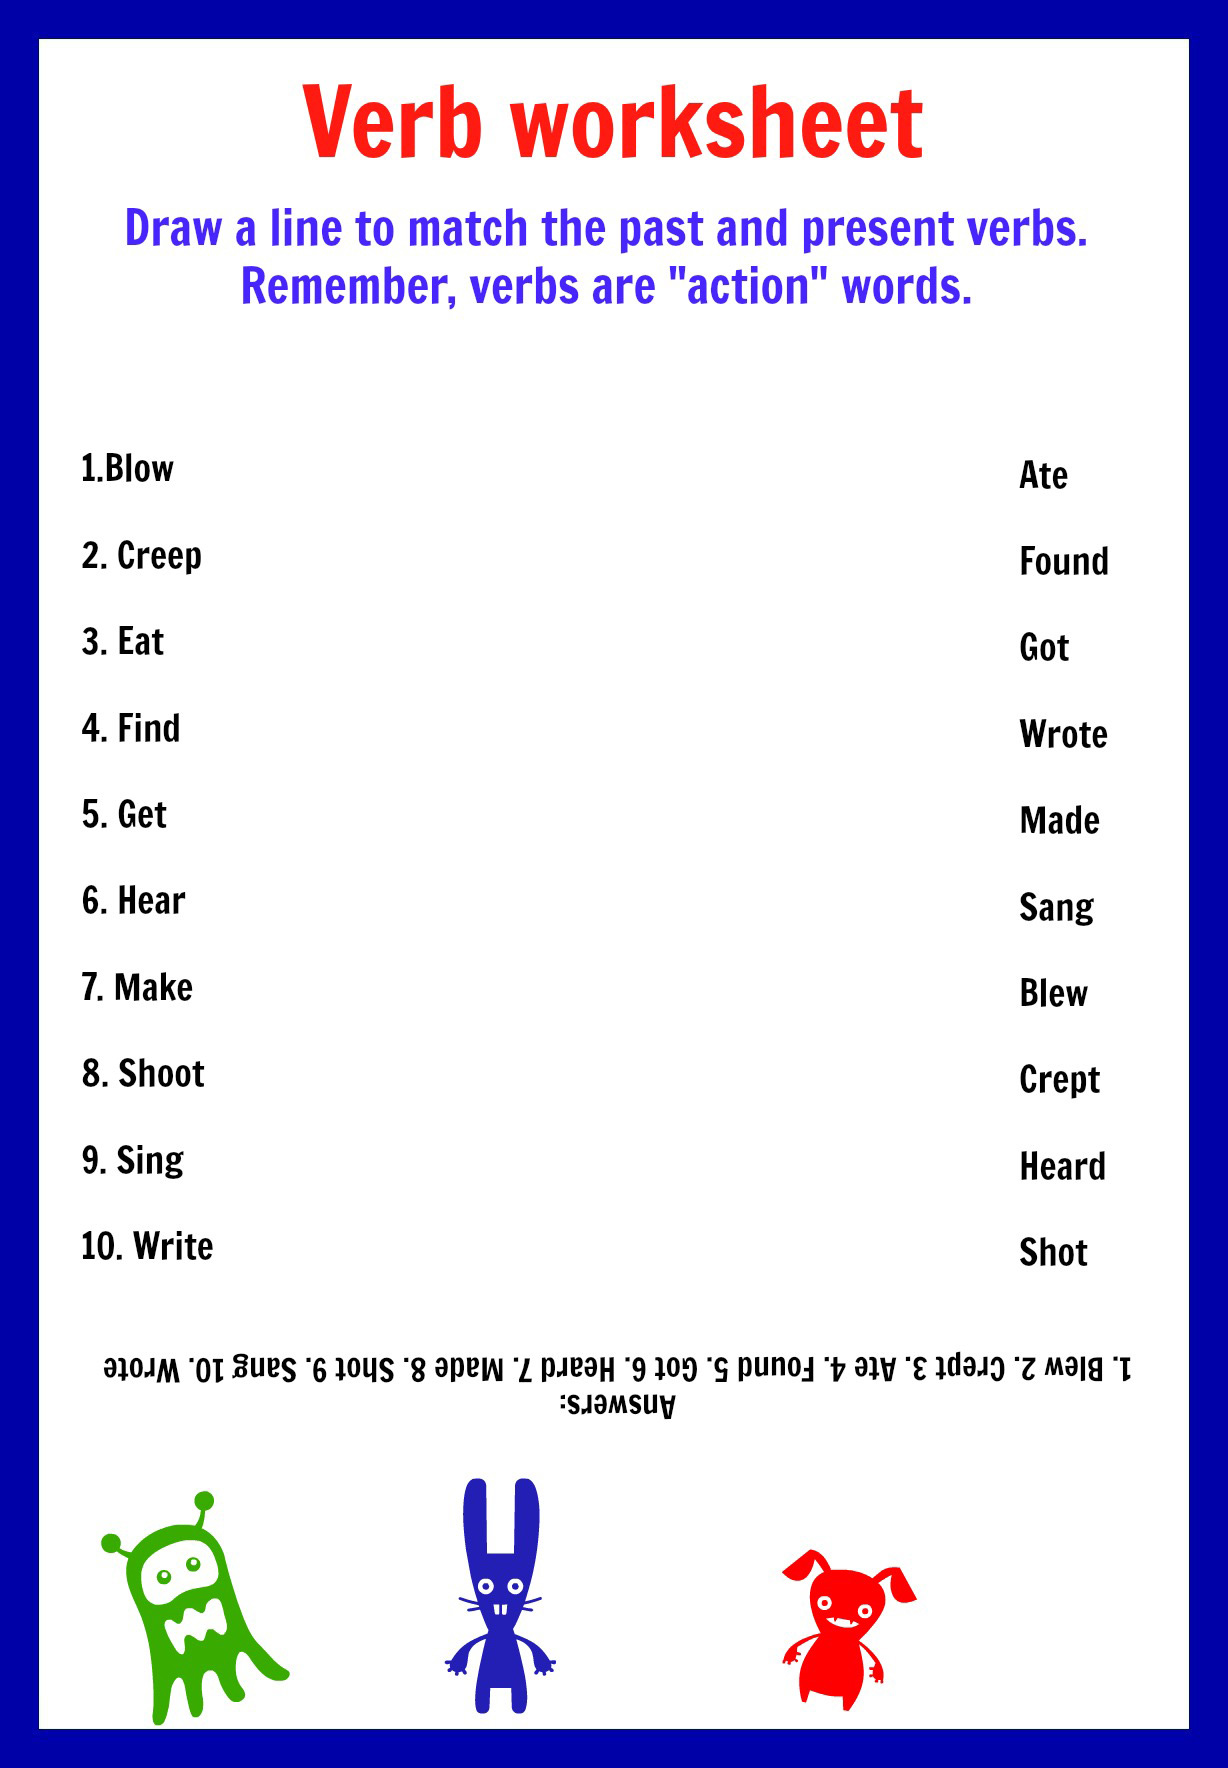 verbs-printable-worksheets-linking-verb-or-action-verb-youtube-javier-boyle